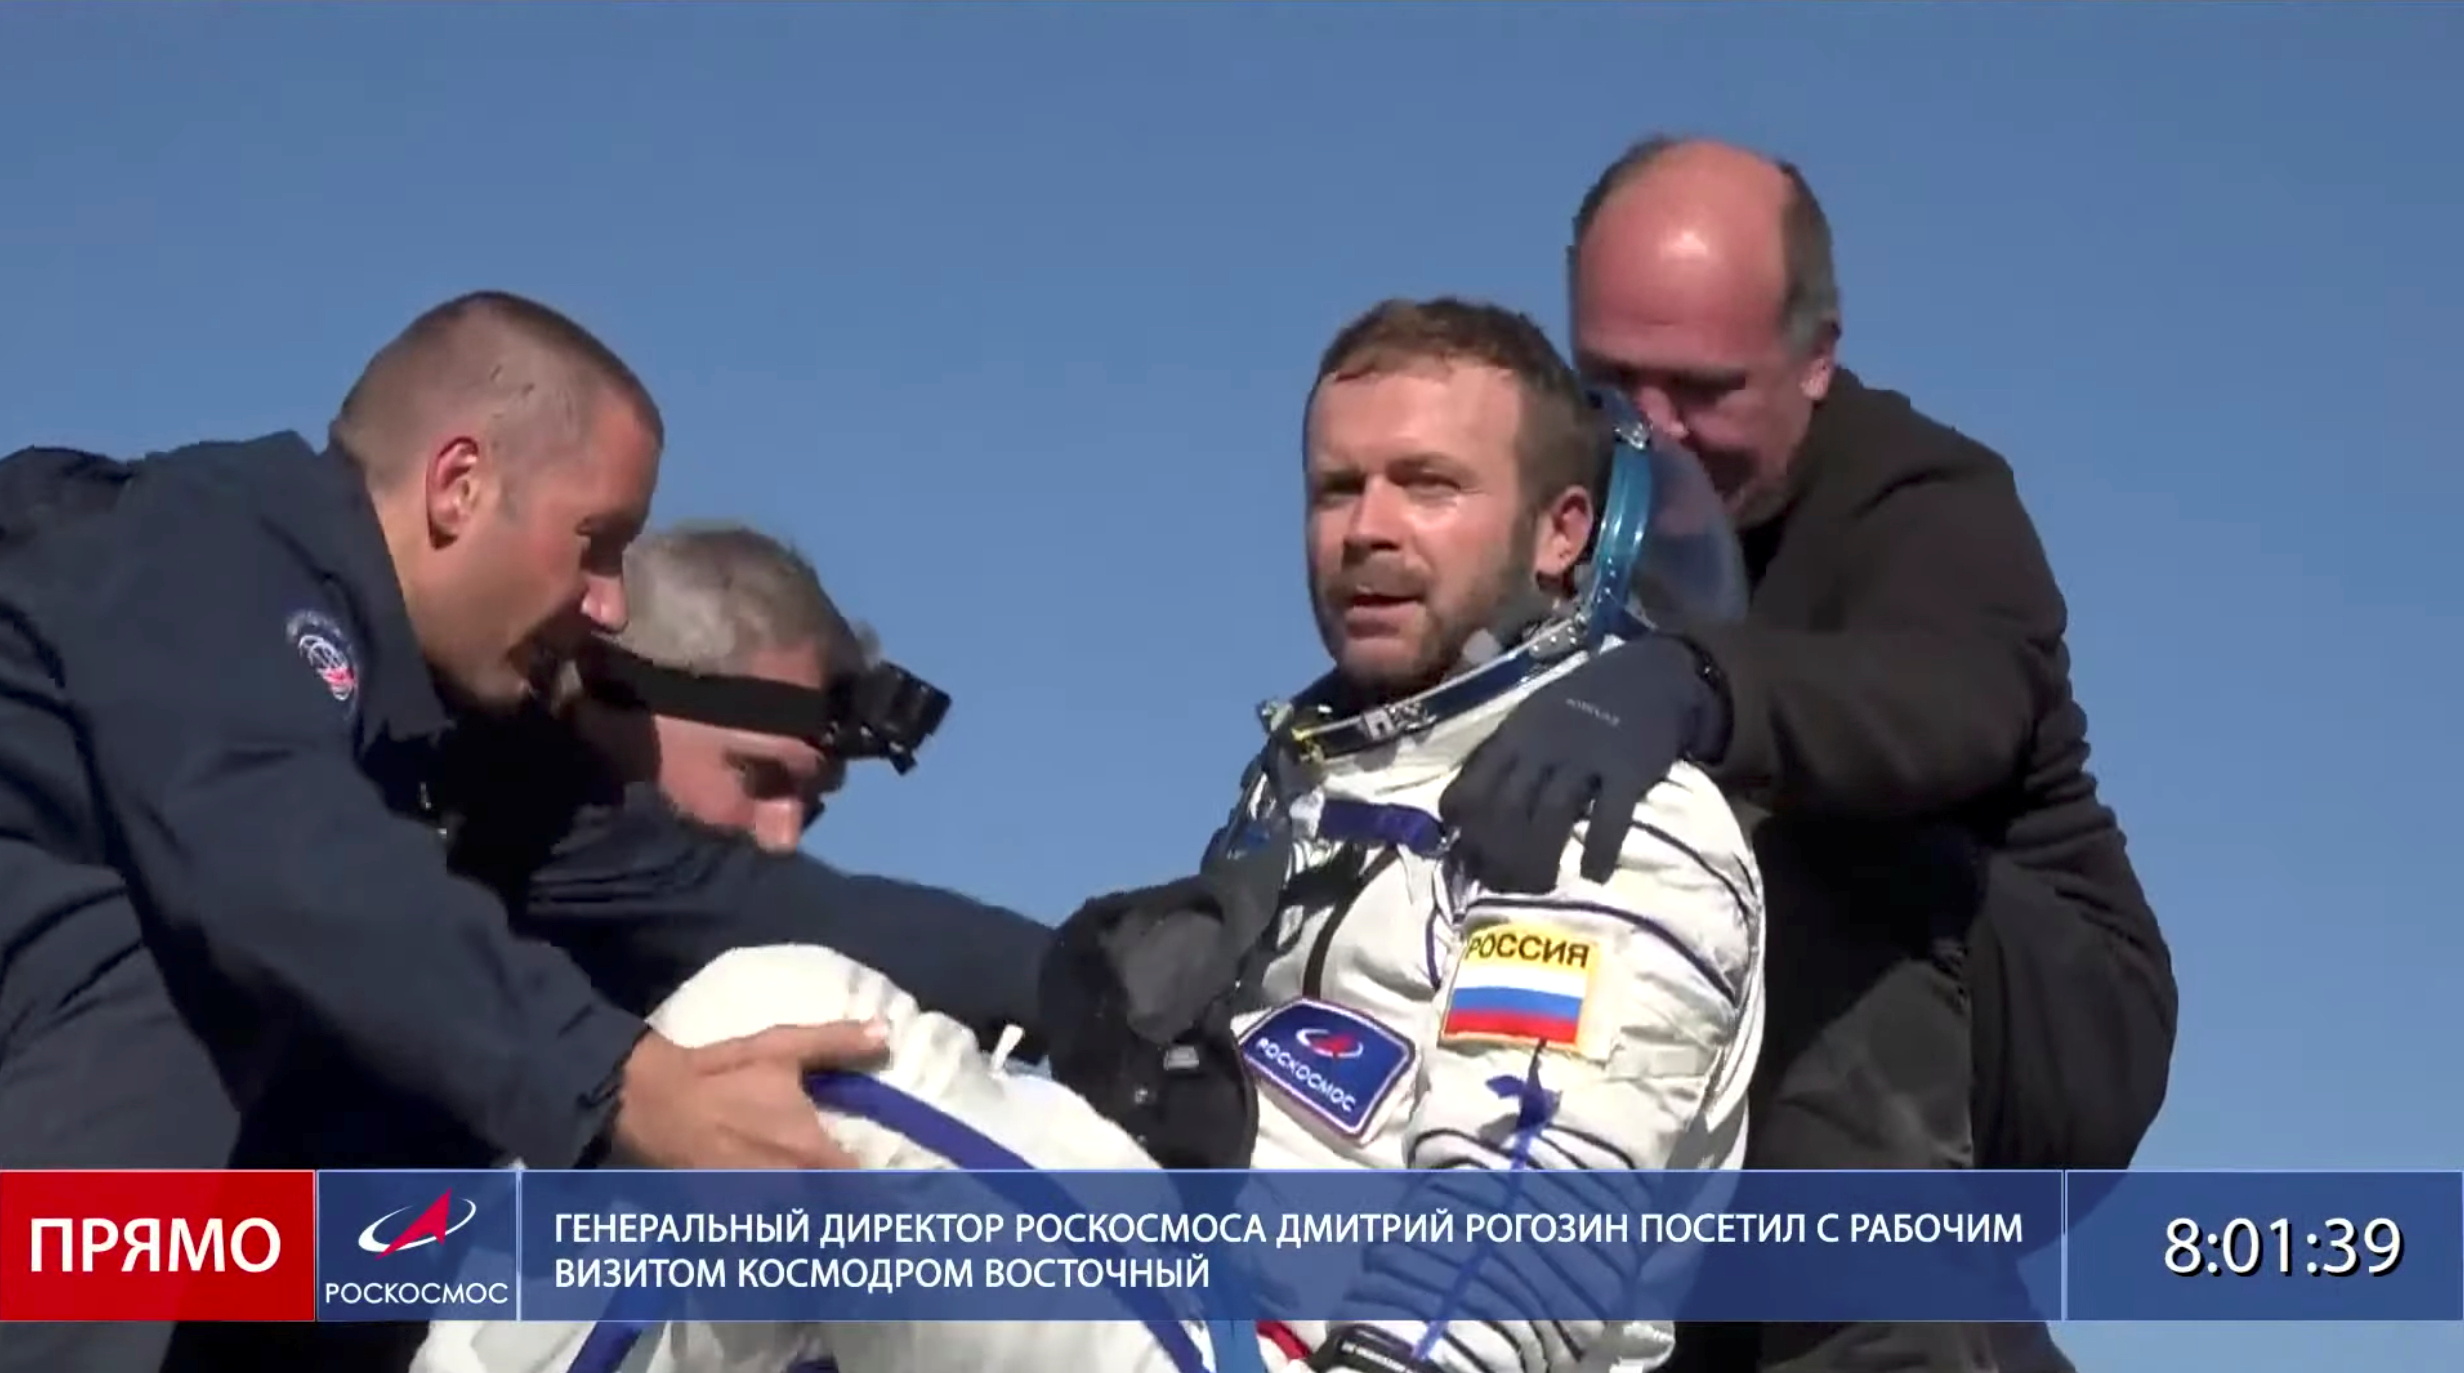 Soyuz MS-18 space capsule lands near Zhezkazgan